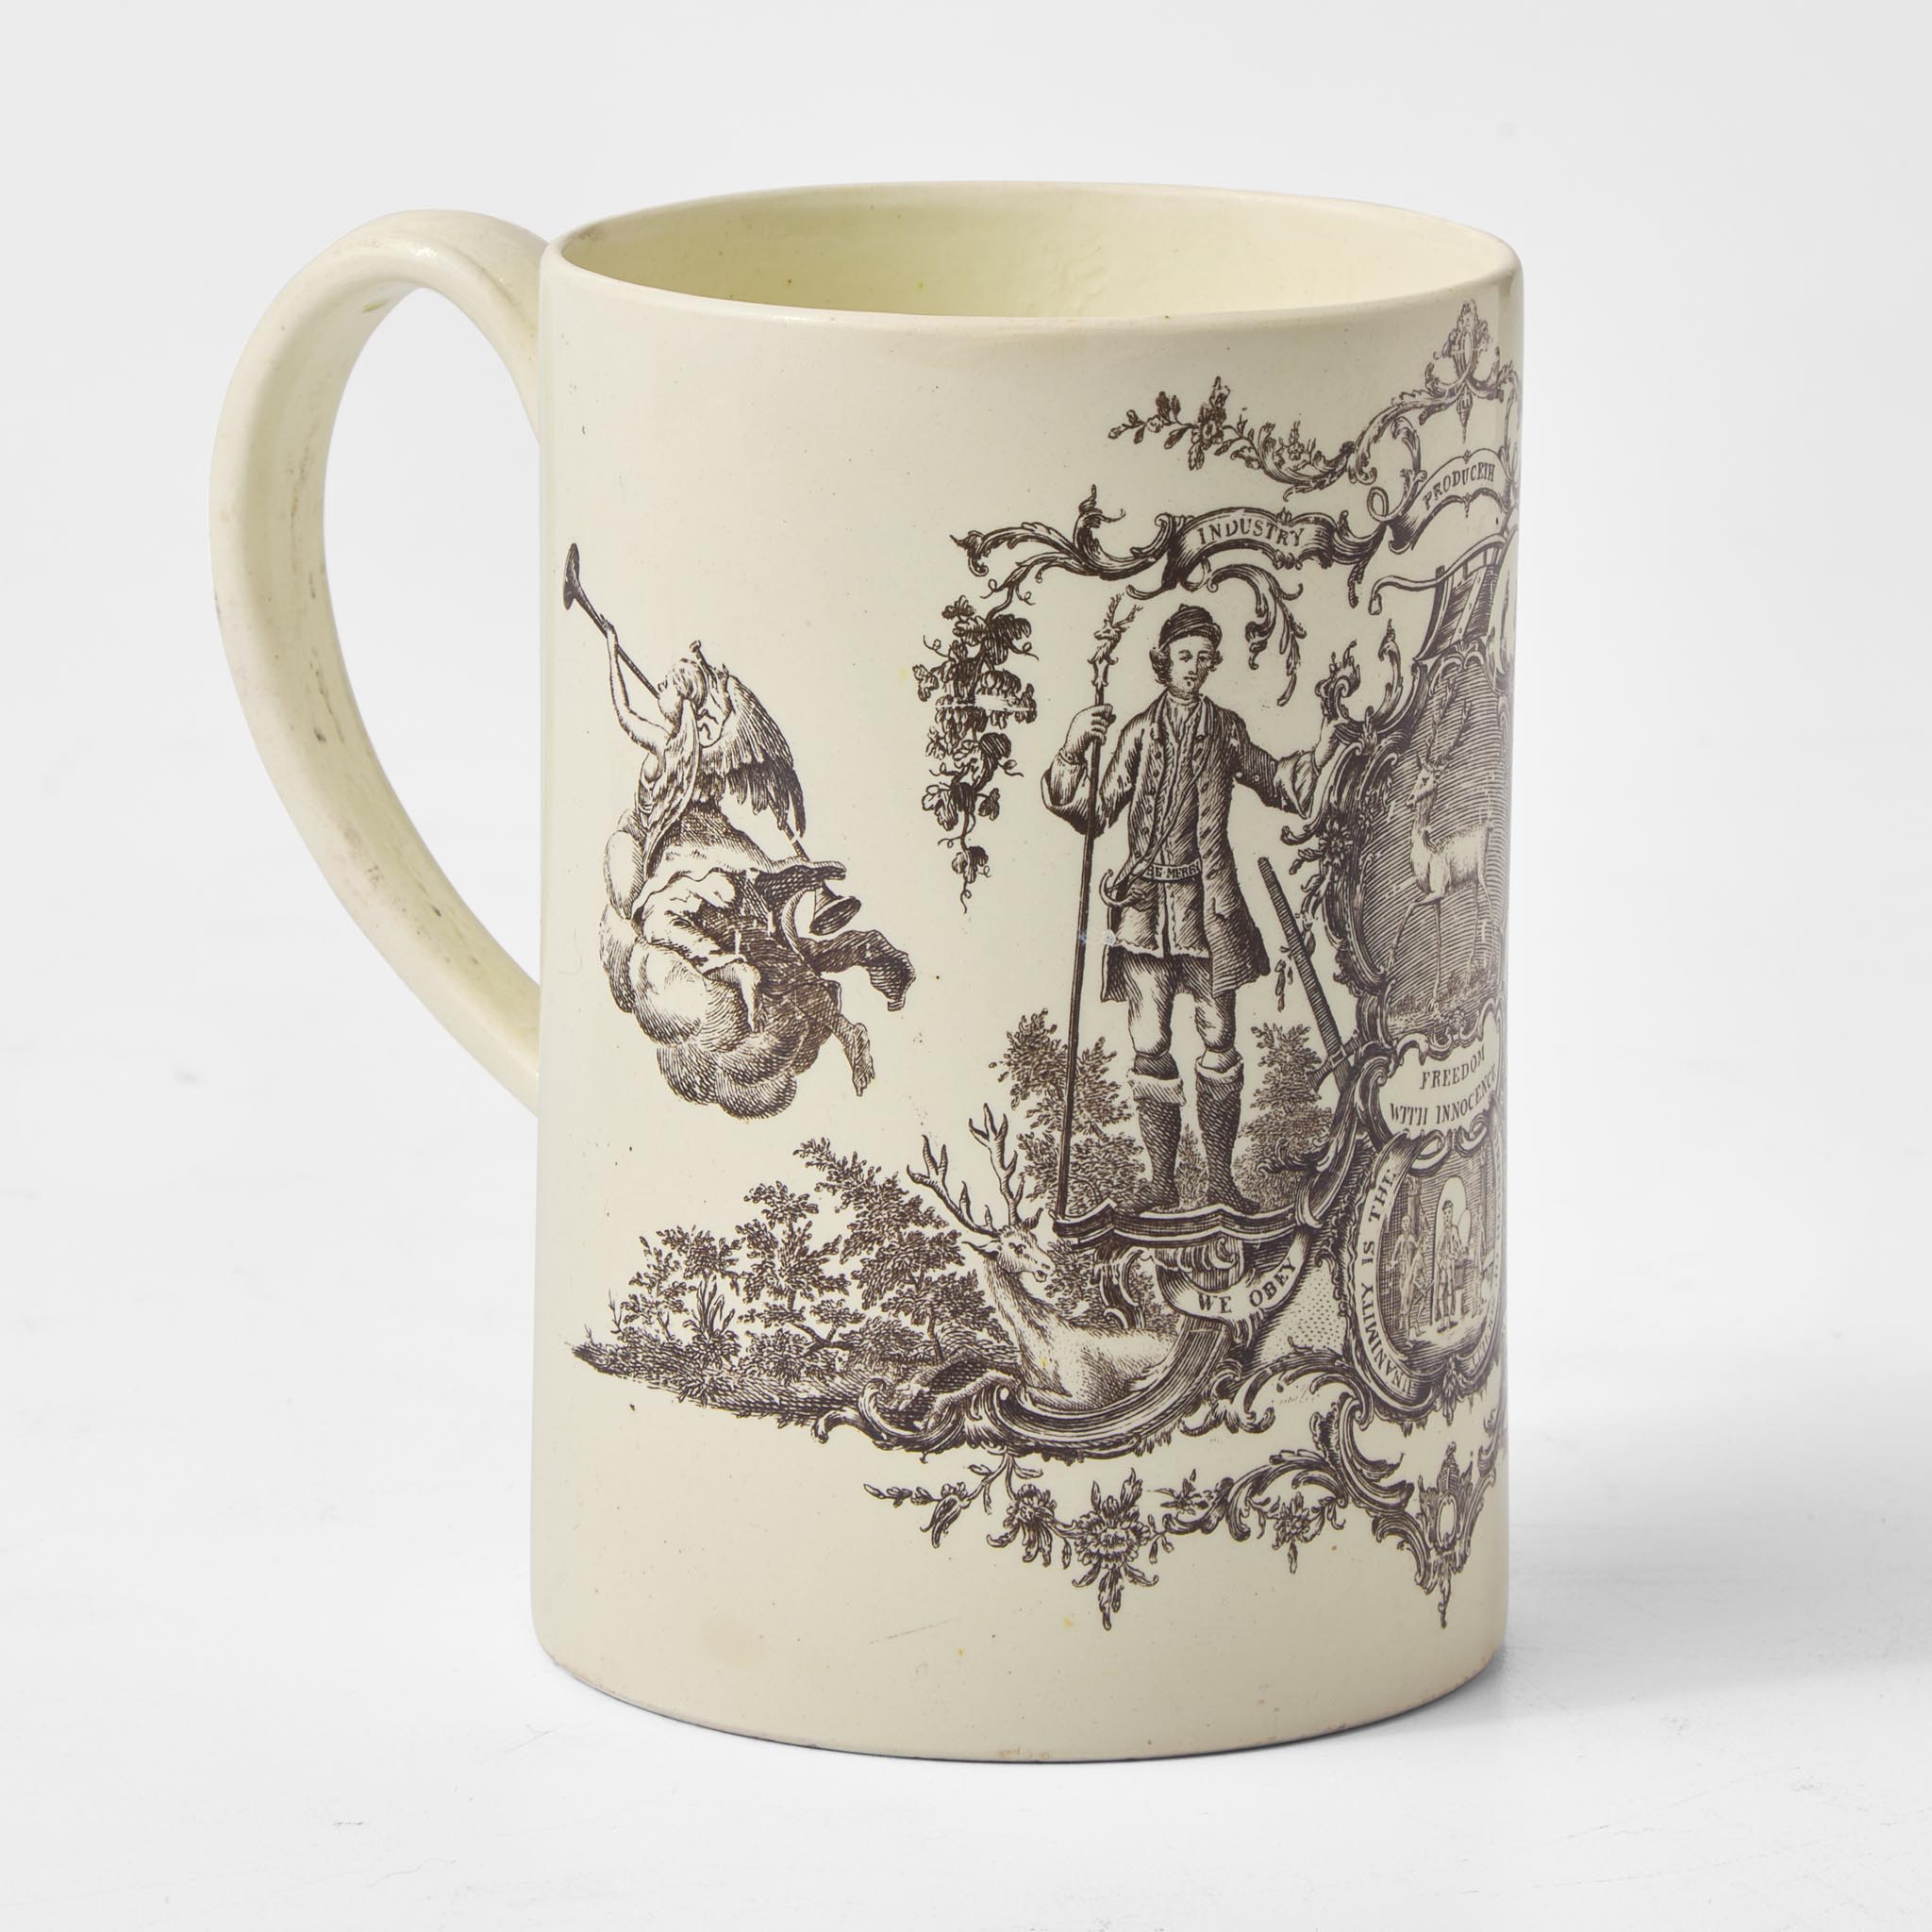 A Wedgwood Transfer-Printed Queensware Mug UK, 1760s - Image 2 of 4